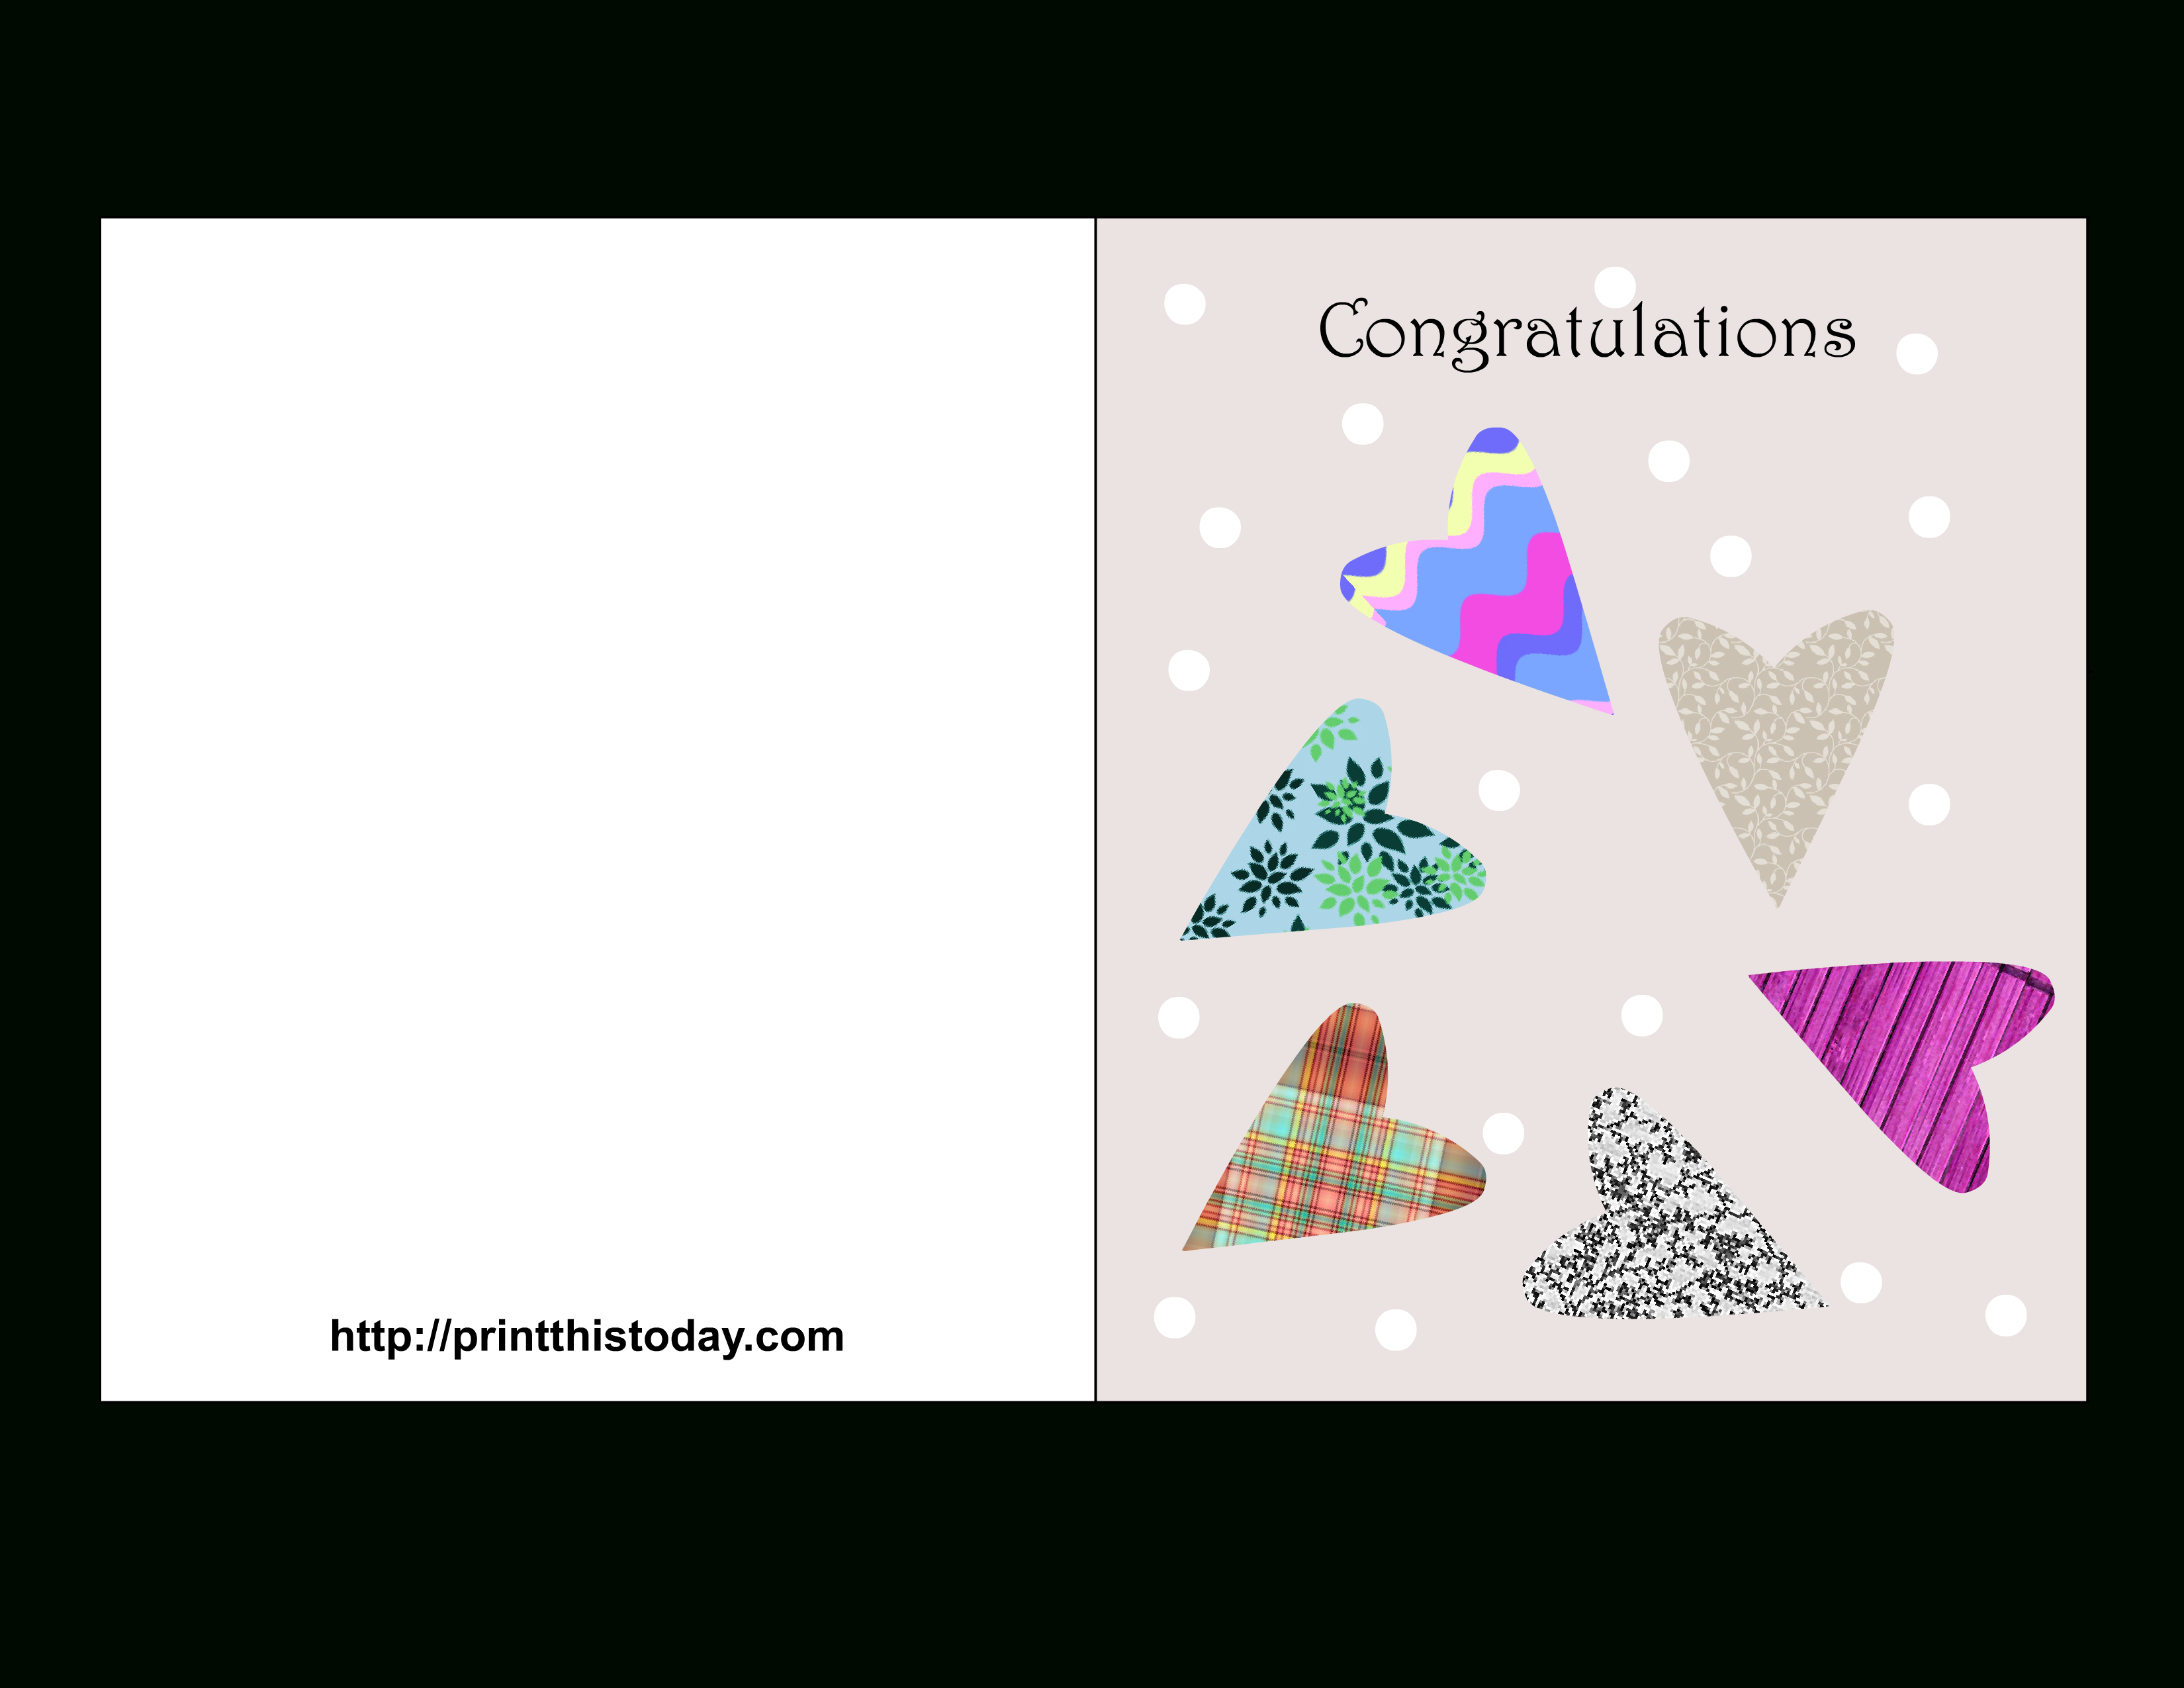 Free Printable Wedding Congratulations Cards - Wedding Wish Cards Printable Free